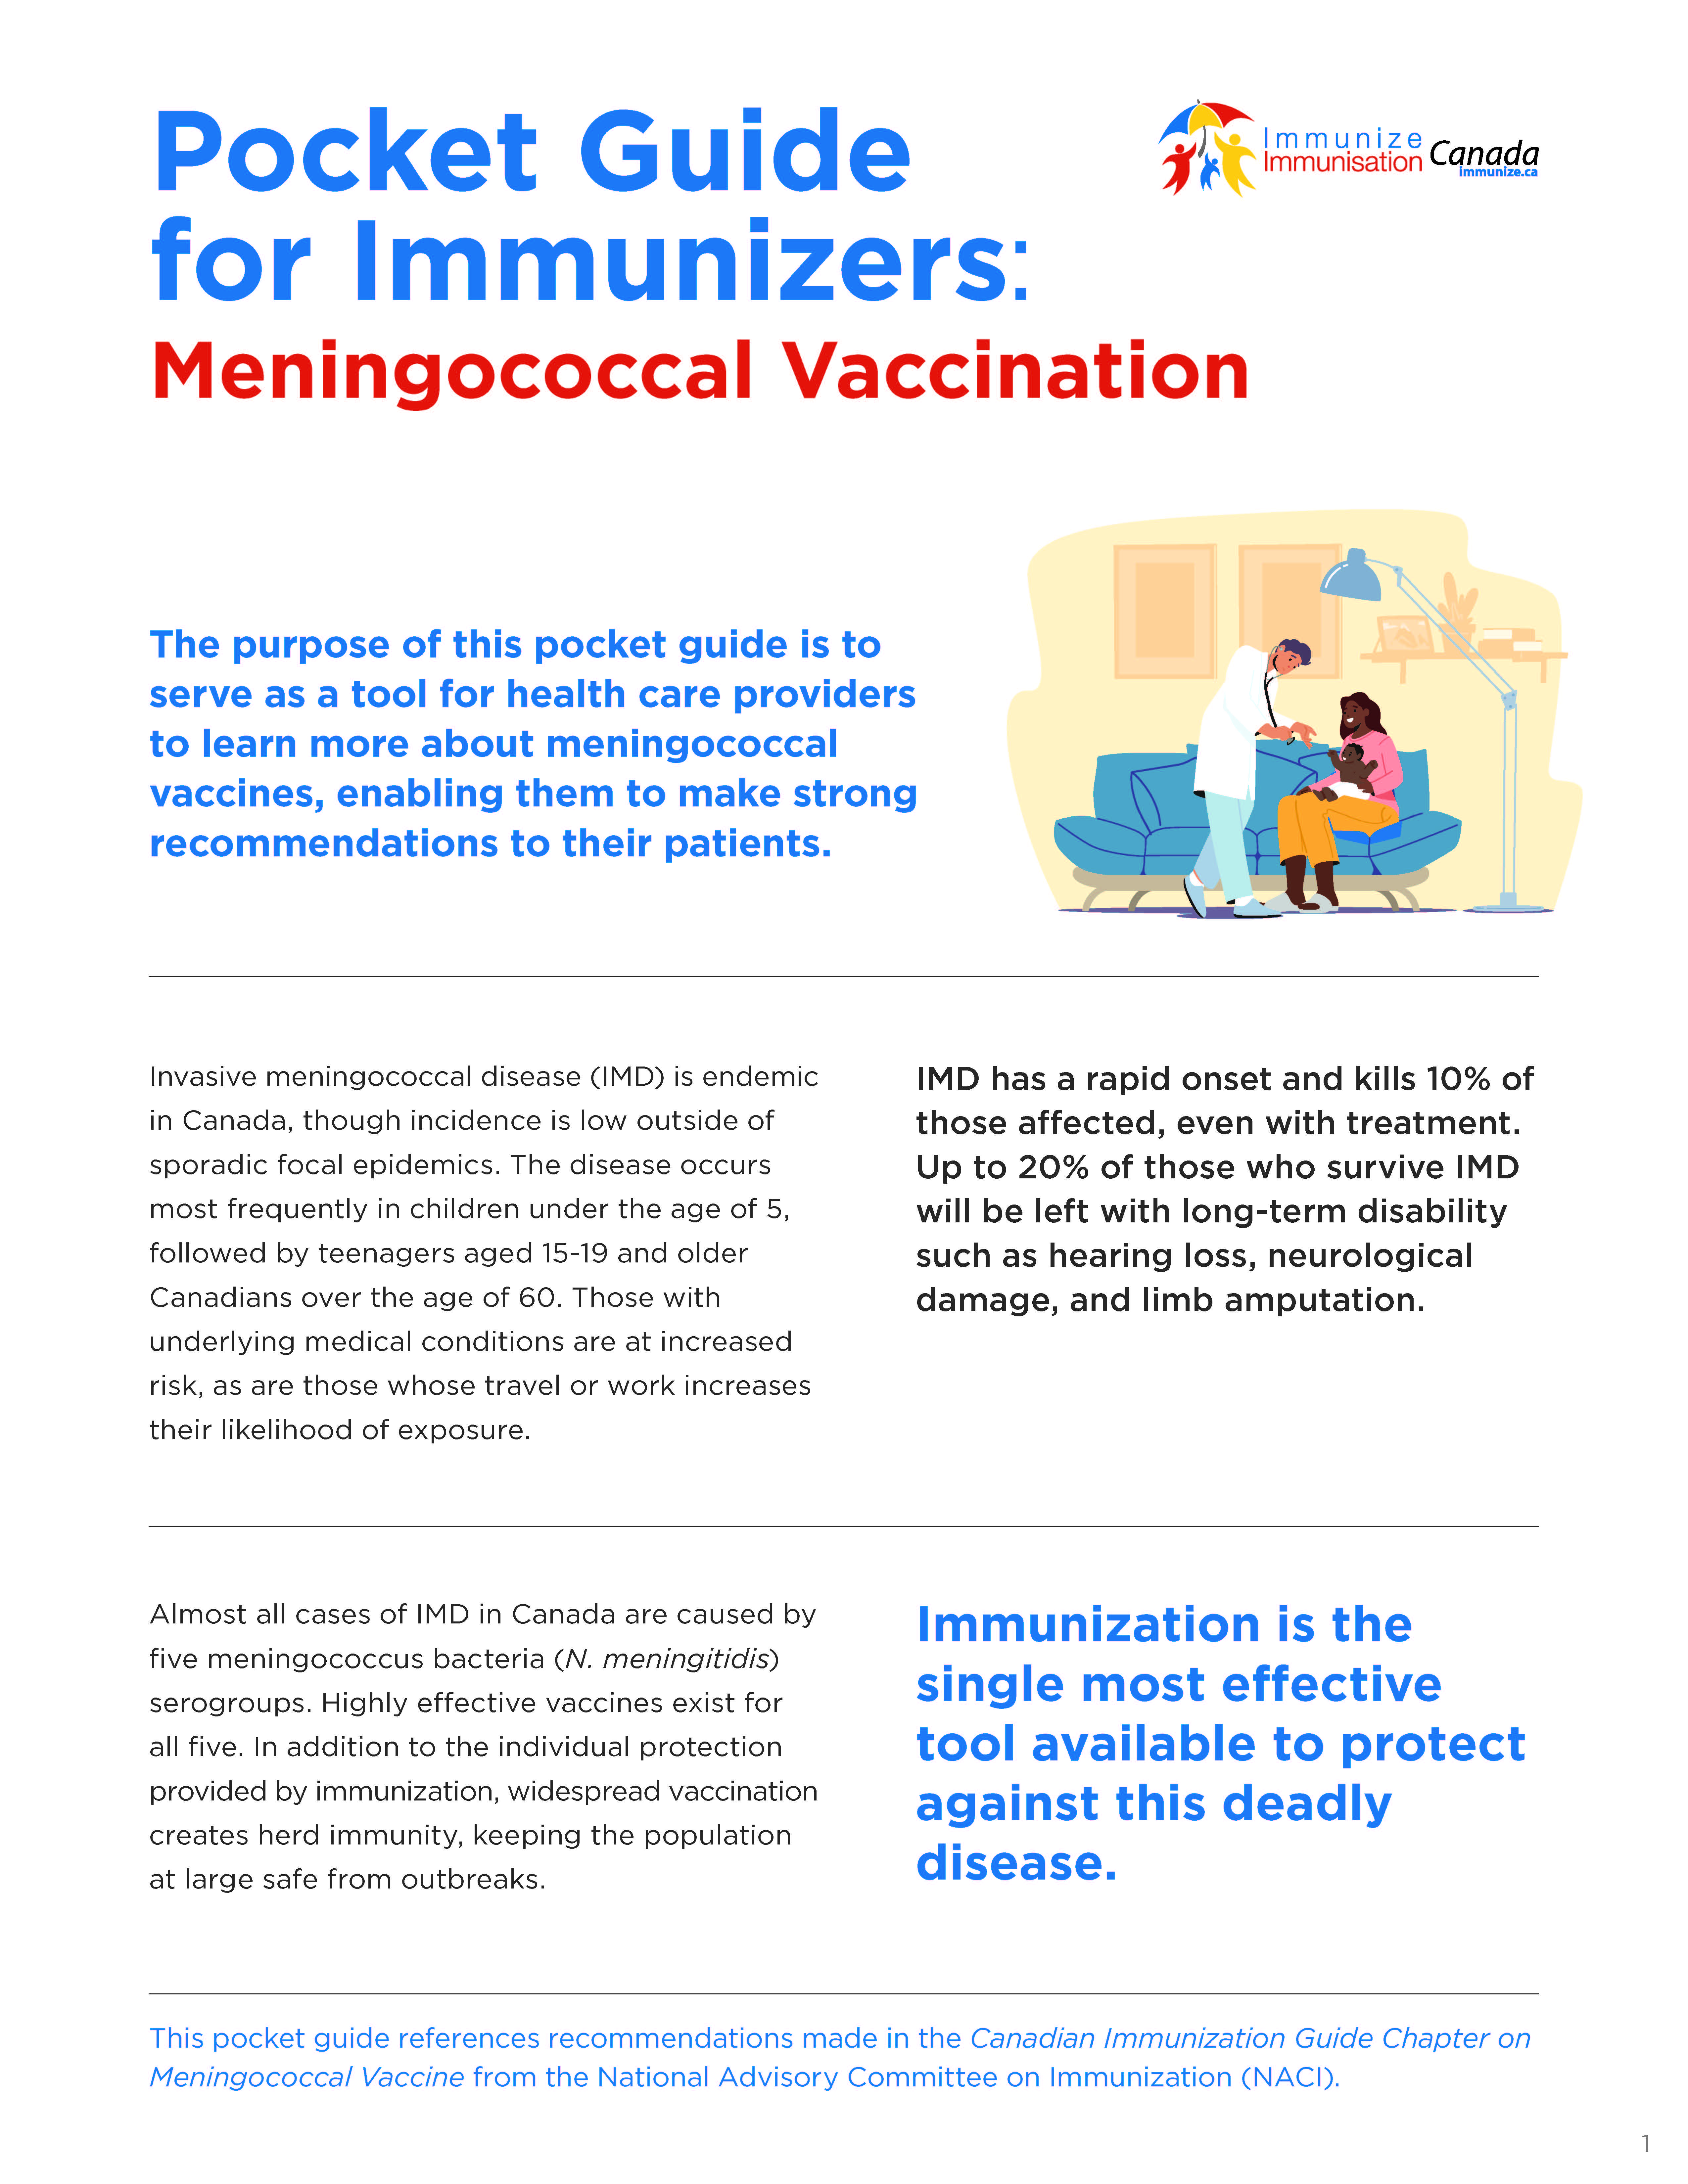 Pocket Guide for Immunizers: Meningococcal Immunization